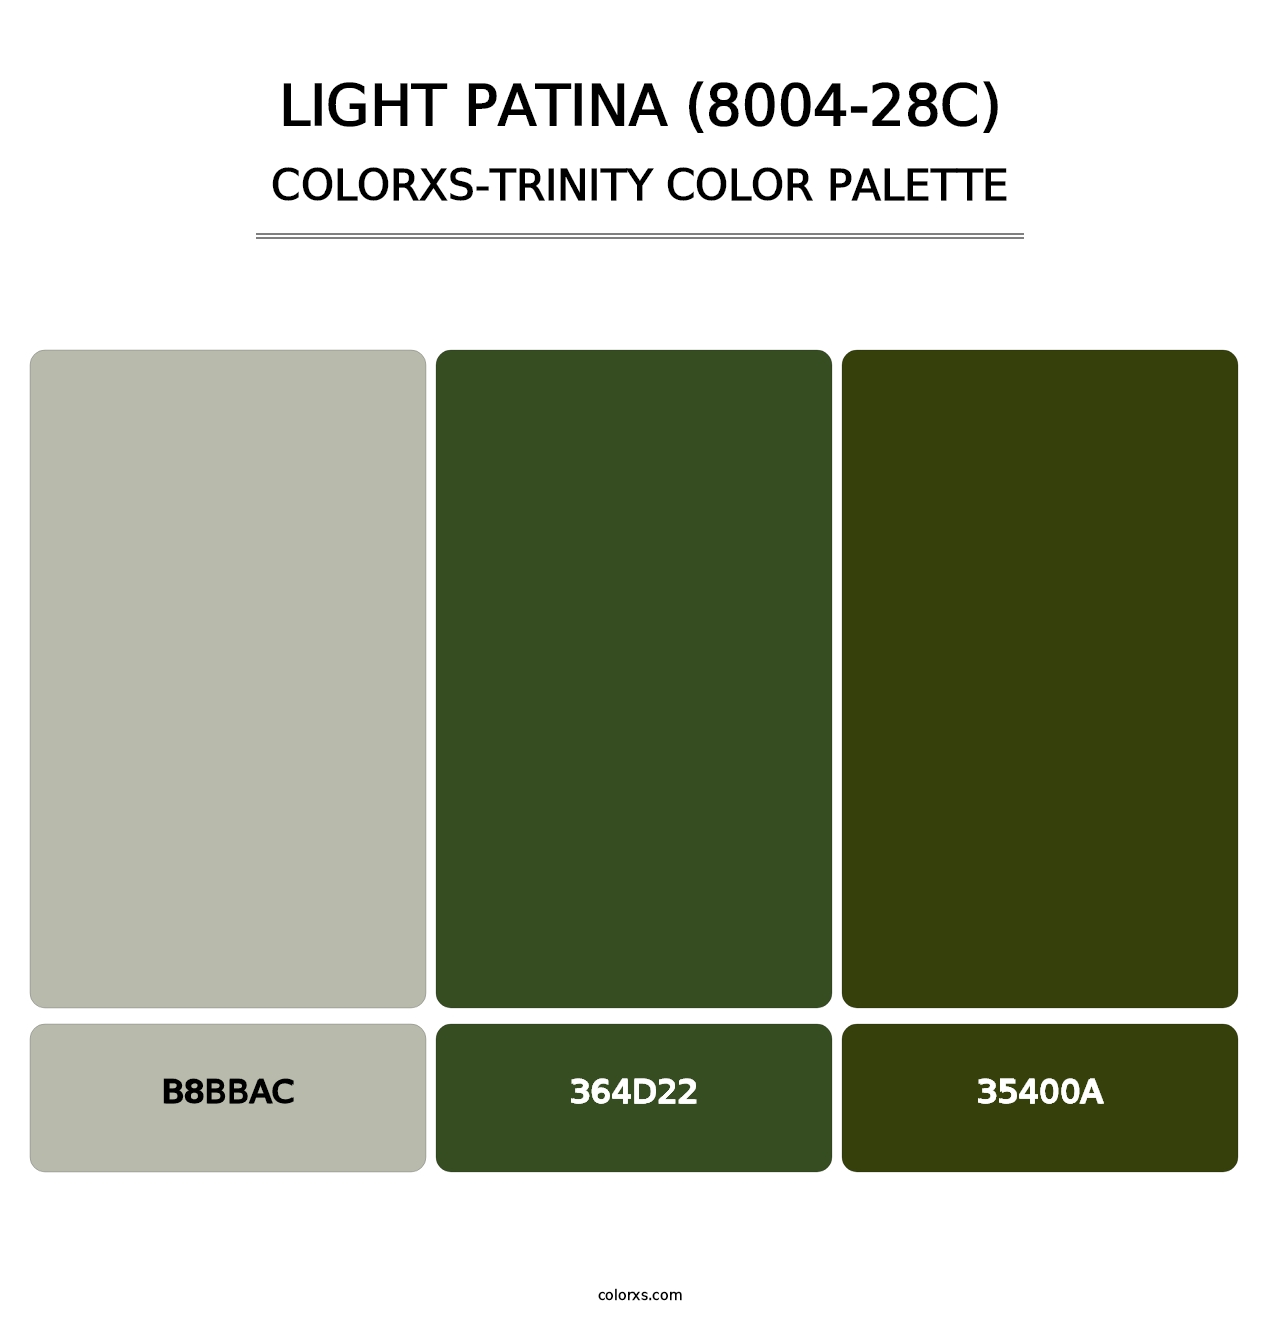 Light Patina (8004-28C) - Colorxs Trinity Palette